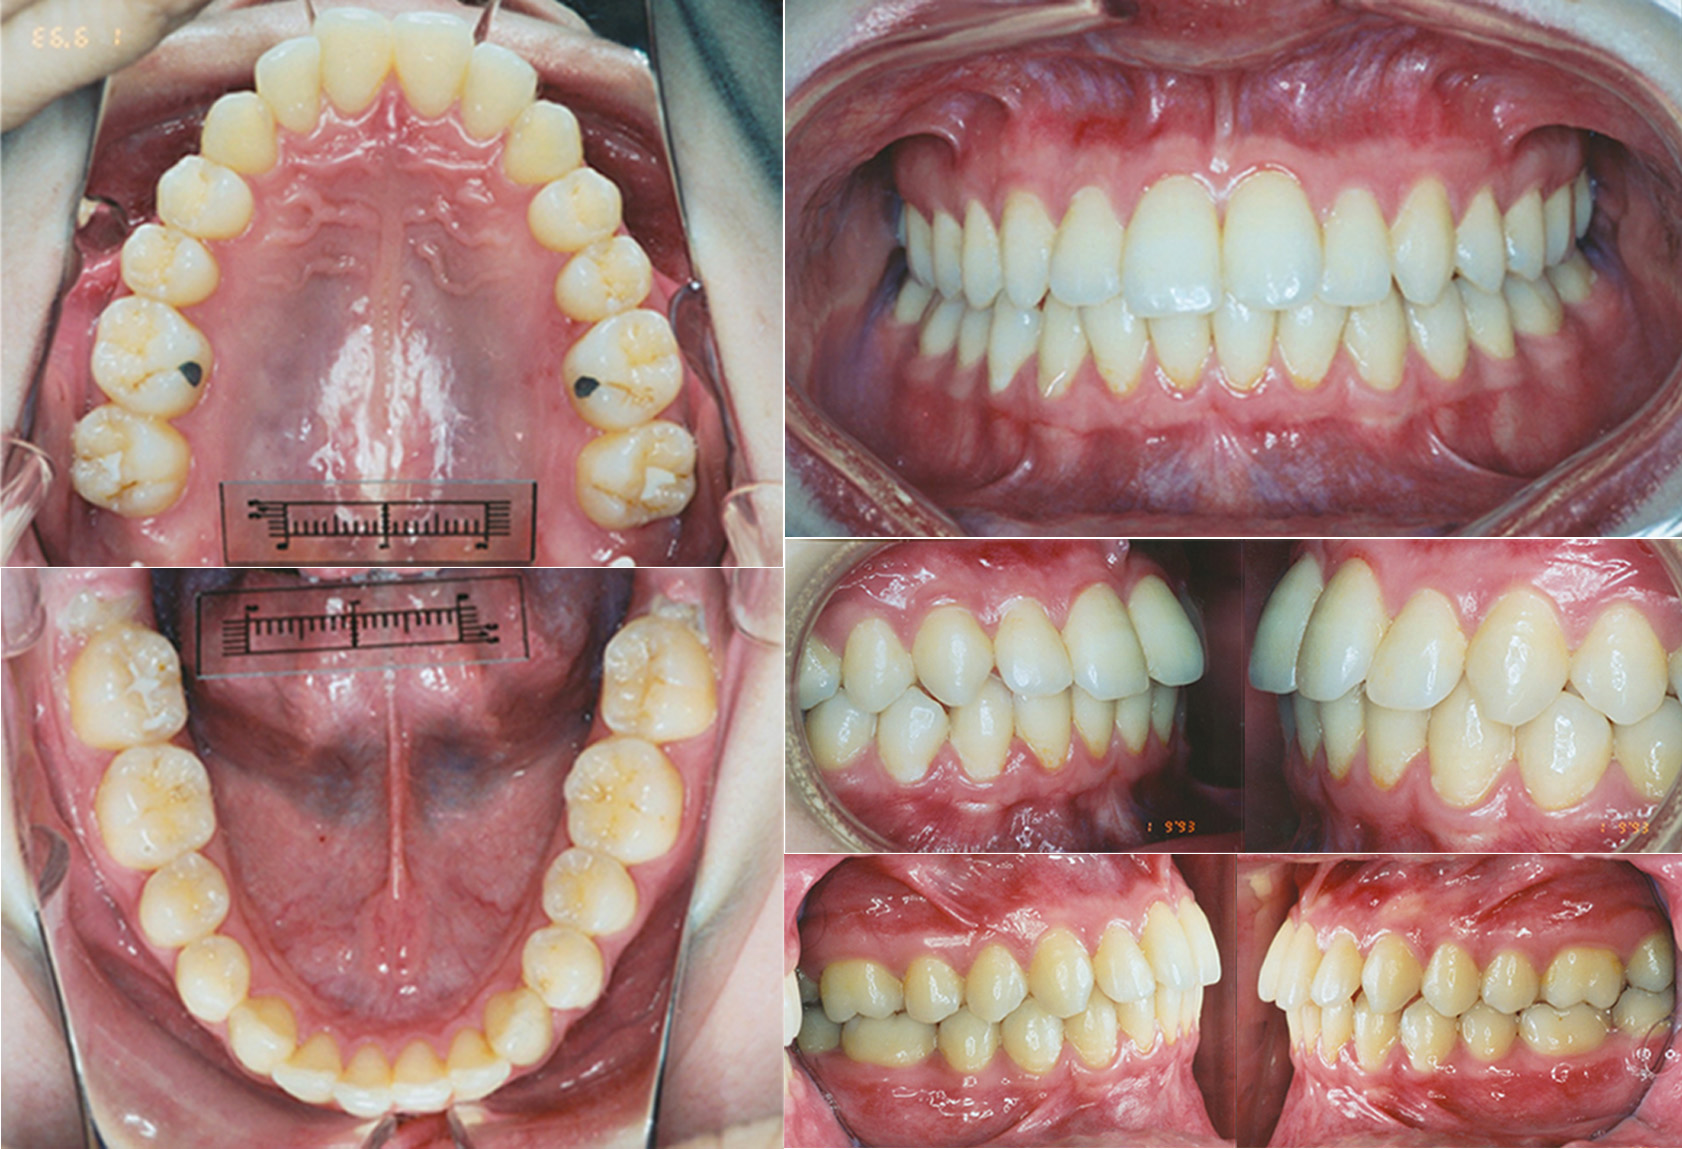 Orthodontic diagnostic photos